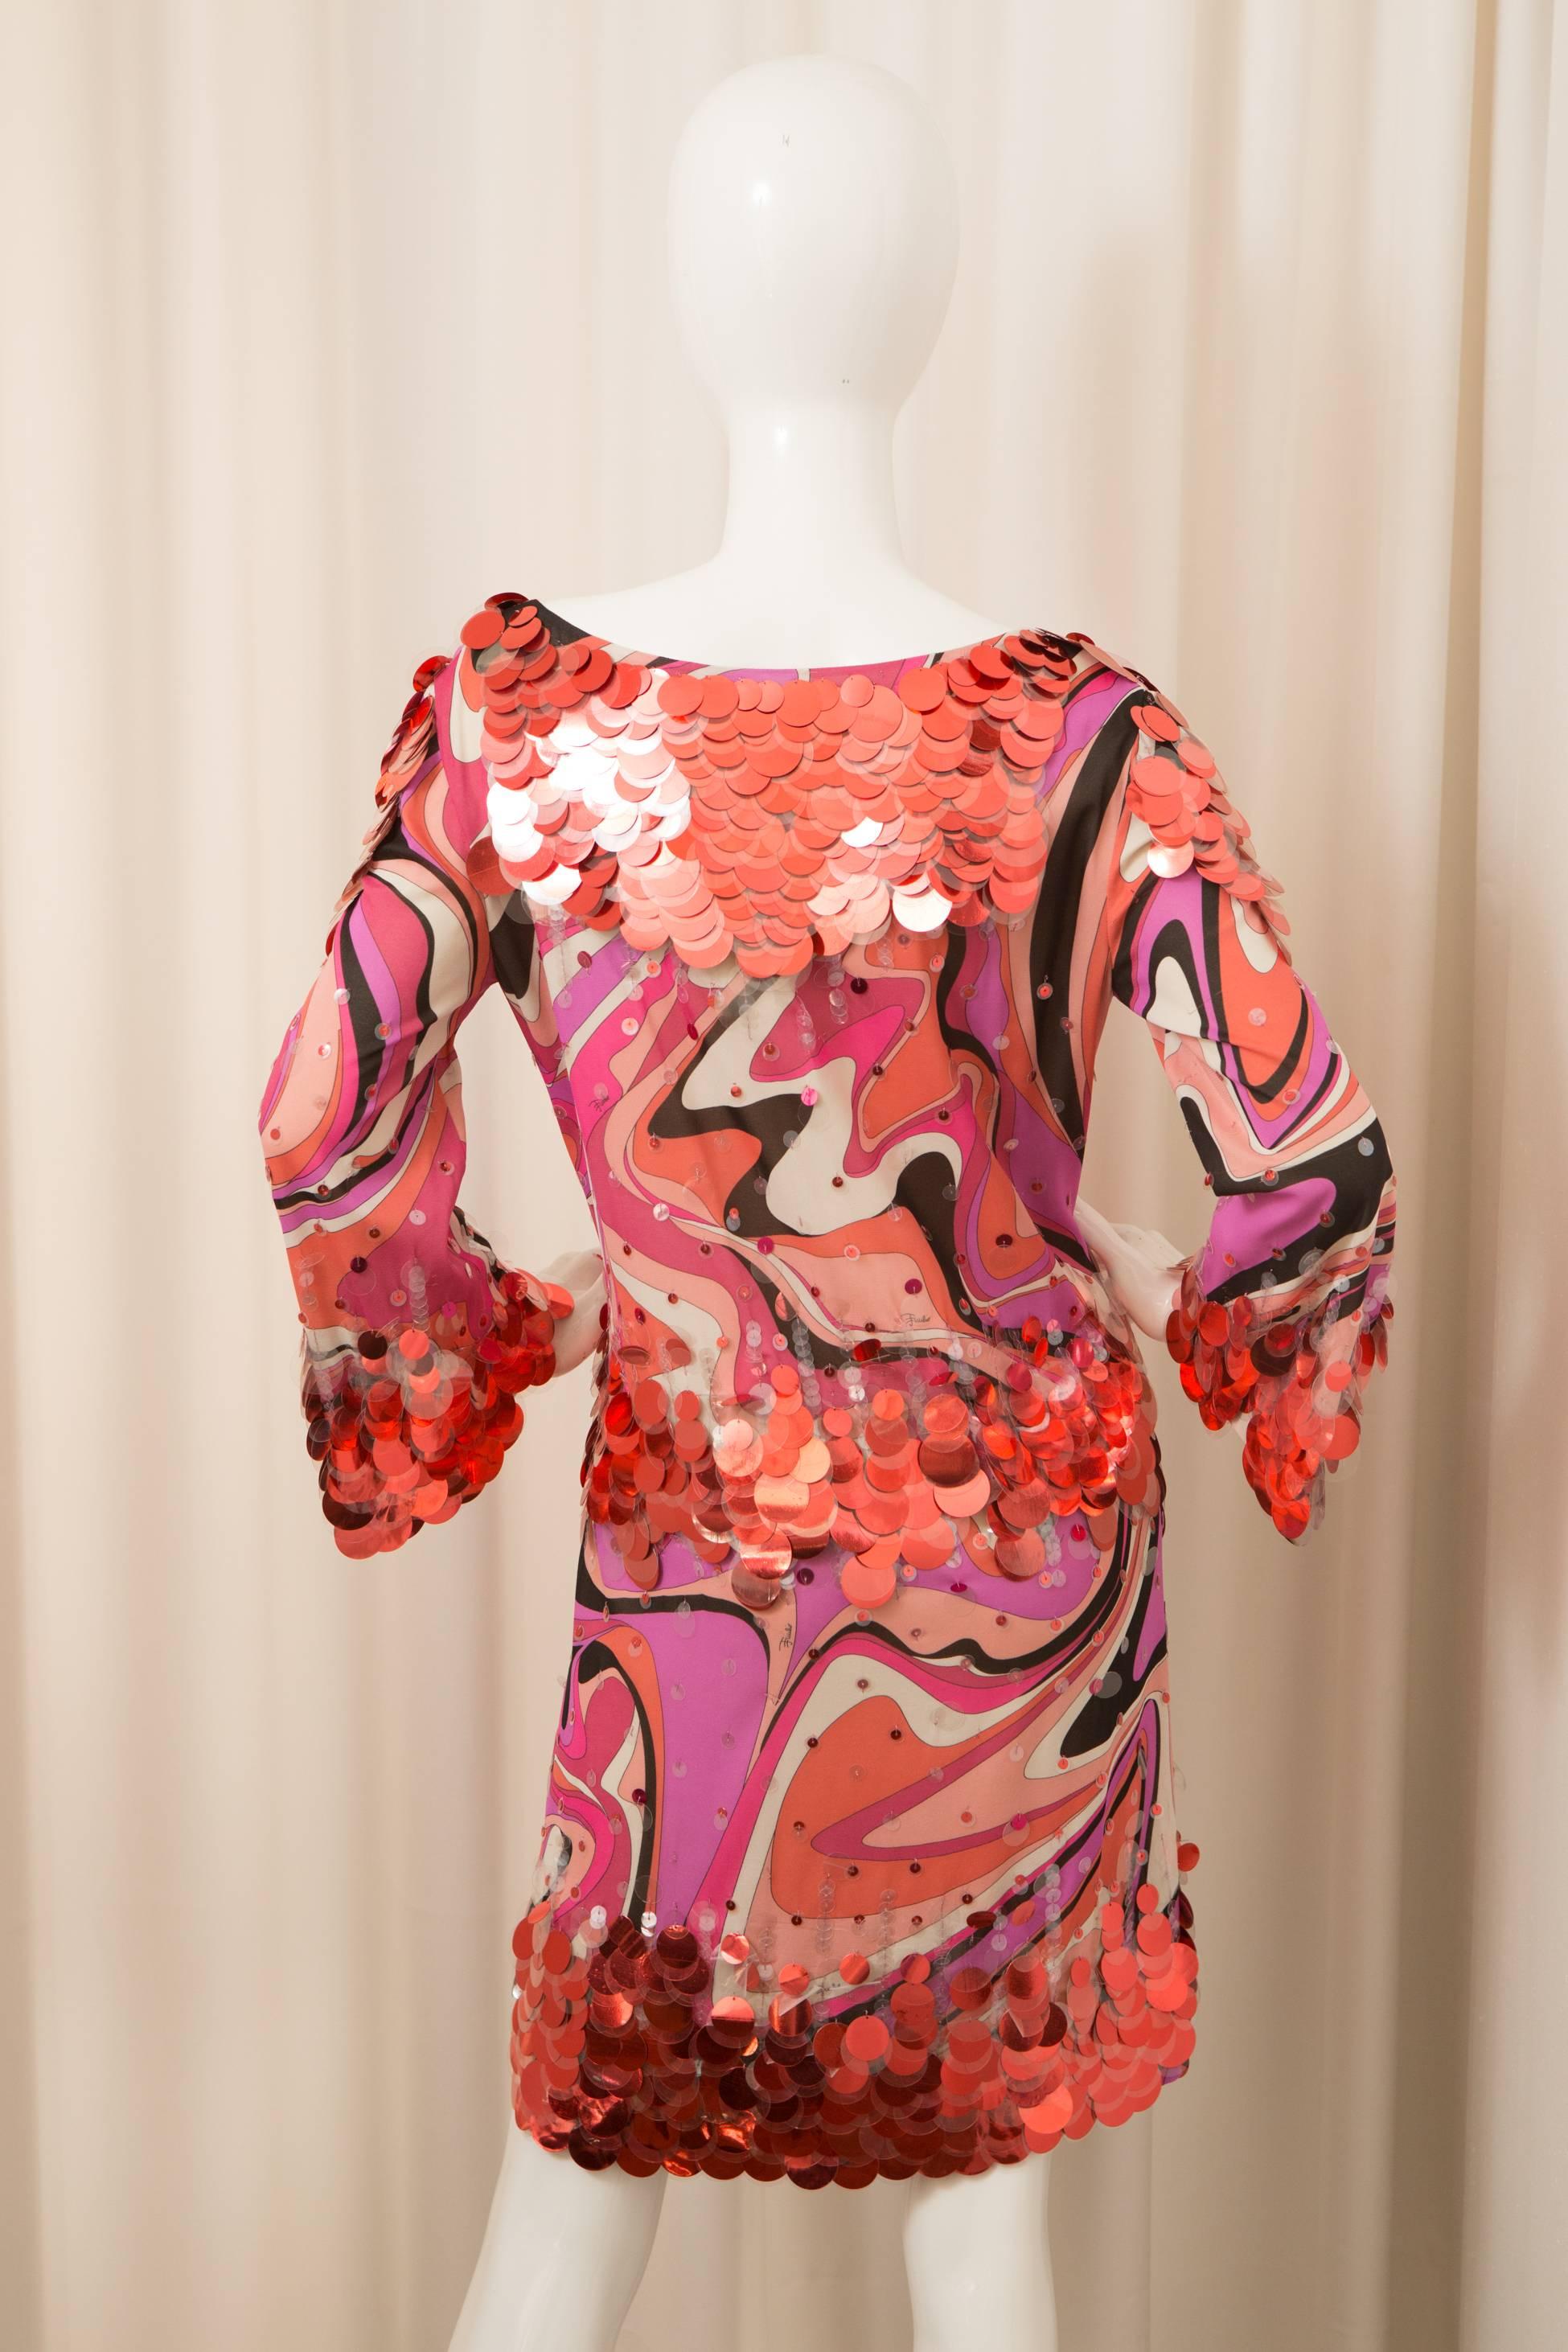 Women's Pucci Multi-Colored Shift Dress with Paillette Detail